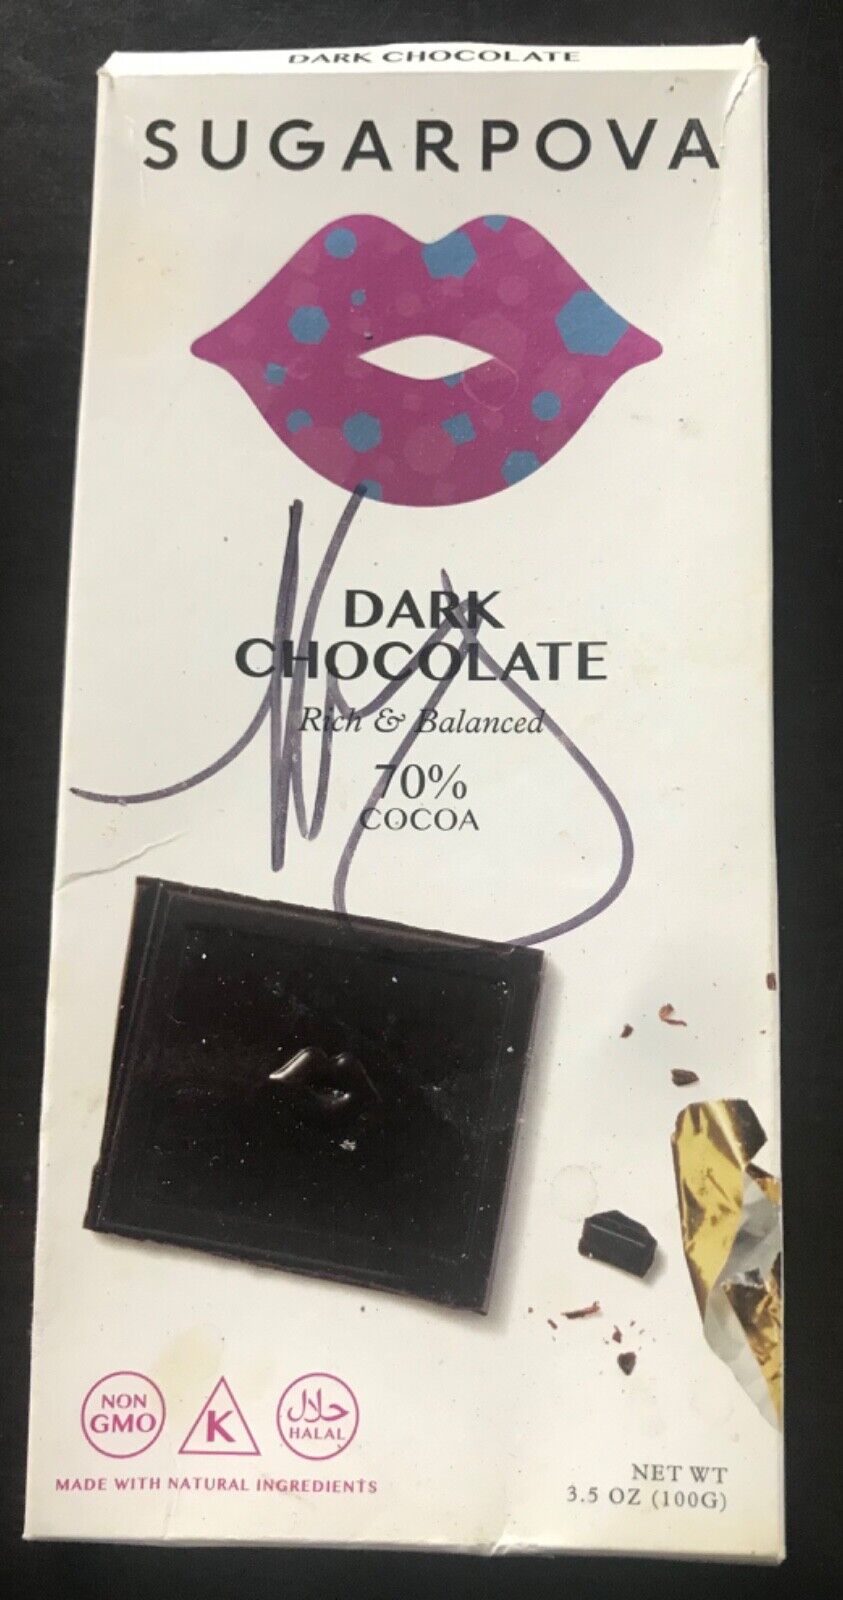 Maria Sharapova Autograph/Signed On An Empty Box of Sugarpova Dark Chocolate